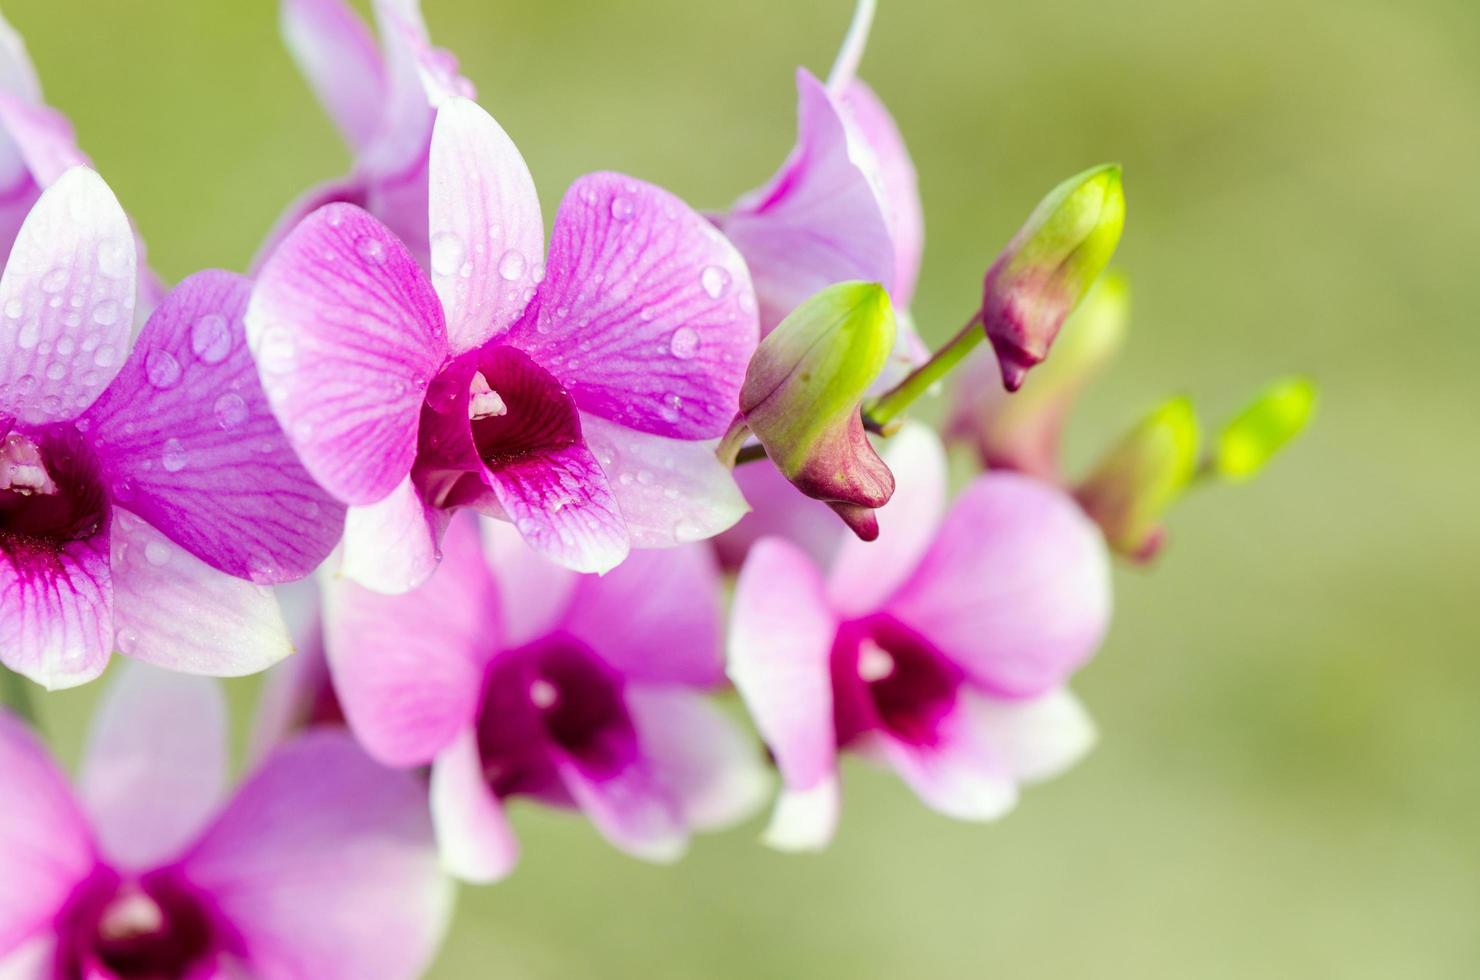 dendrobium orchidea ibridi è bianca e rosa strisce foto